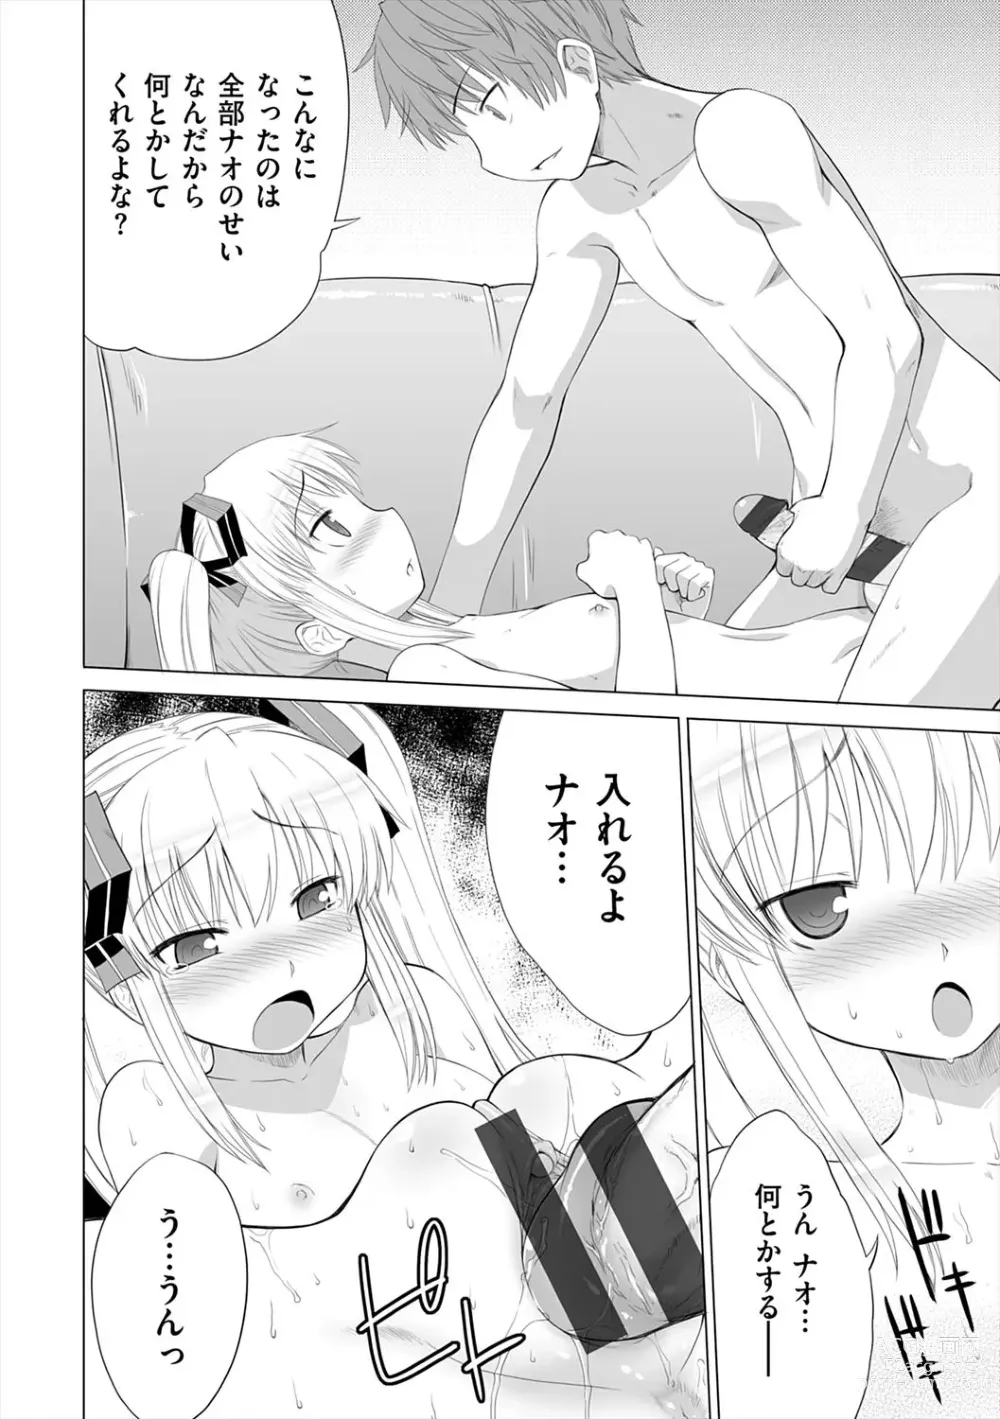 Page 194 of manga Marble Girls